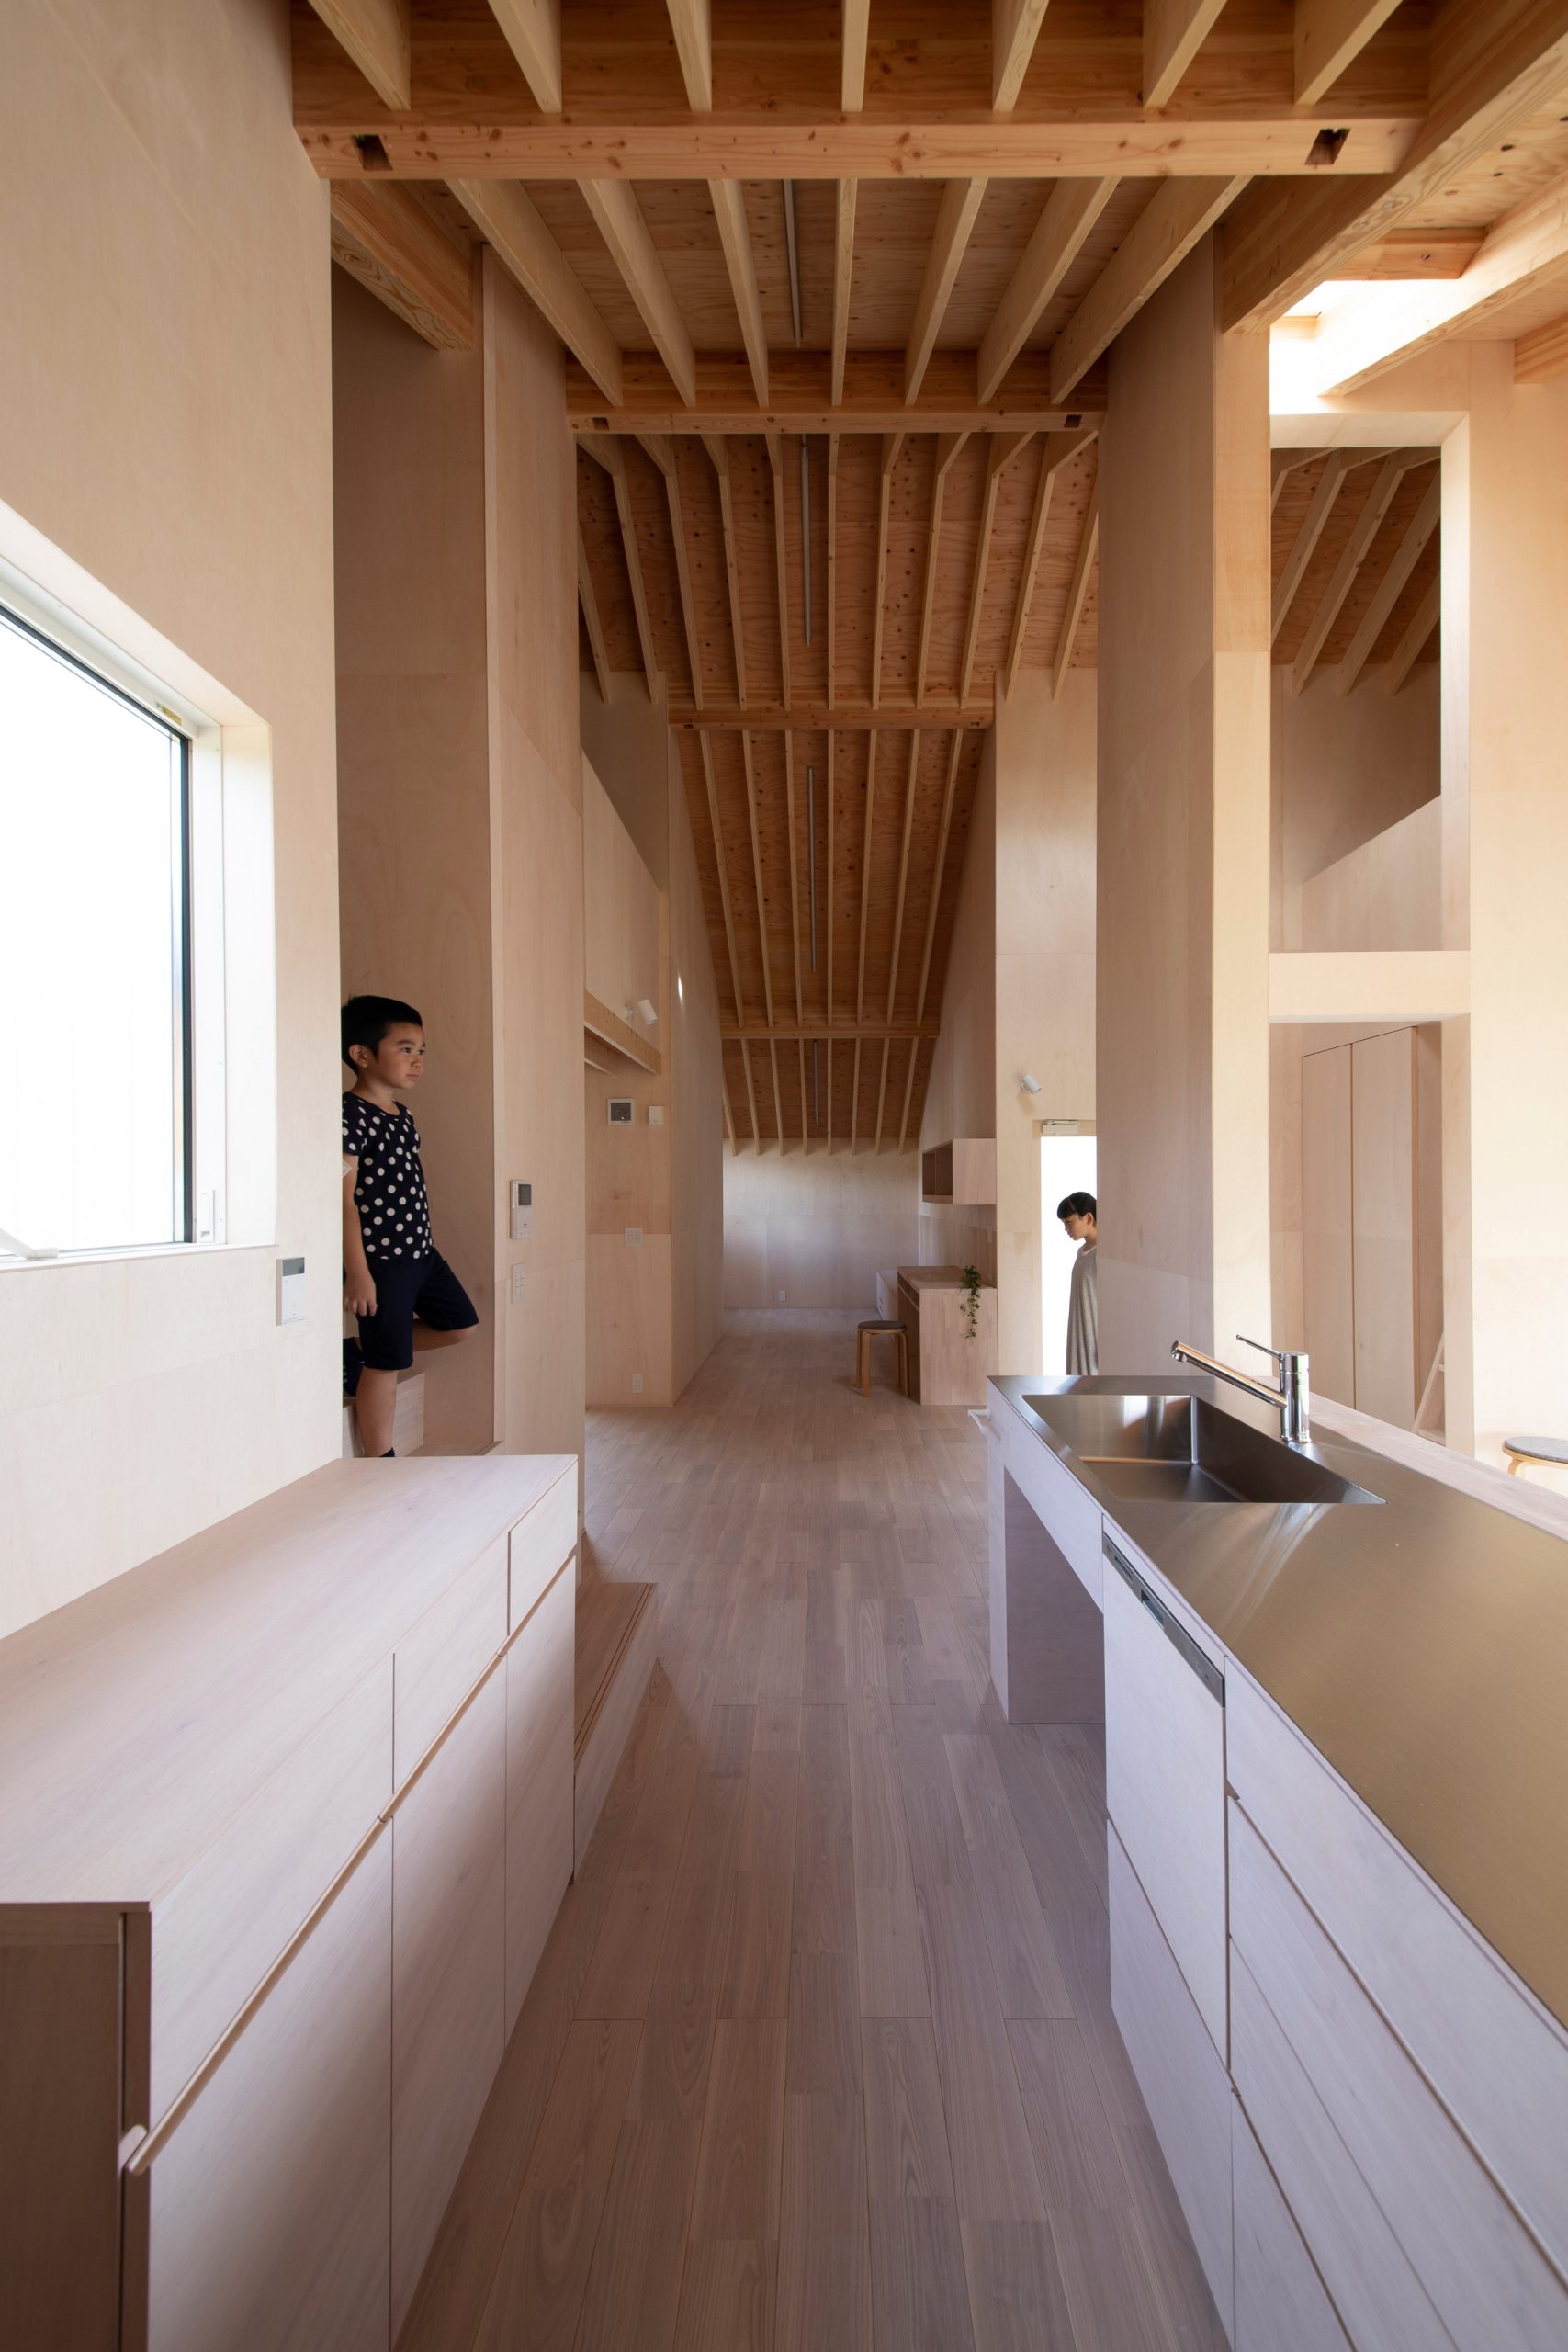 Interiors by Katsutoshi Sasaki have a wood finish